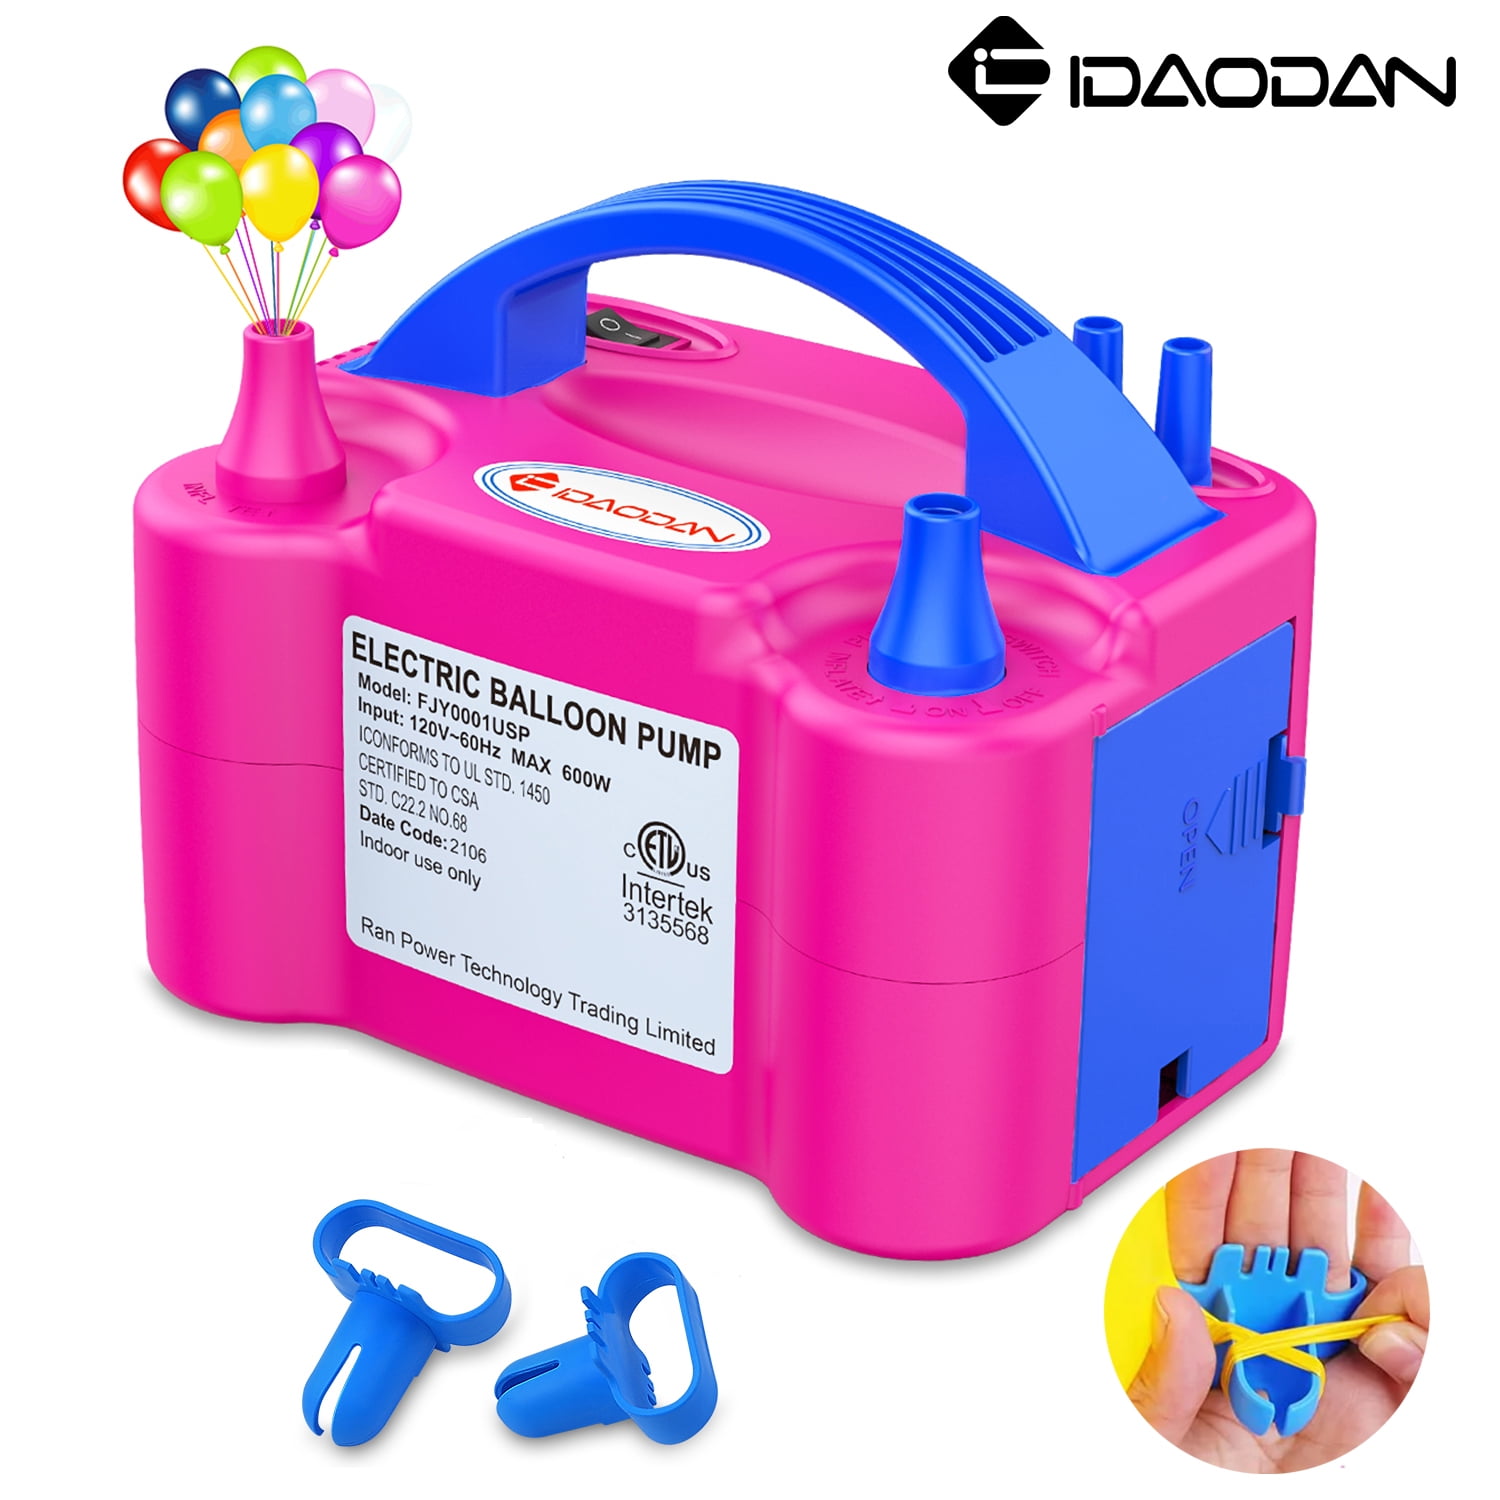 Portable wireless air pump – yodopin